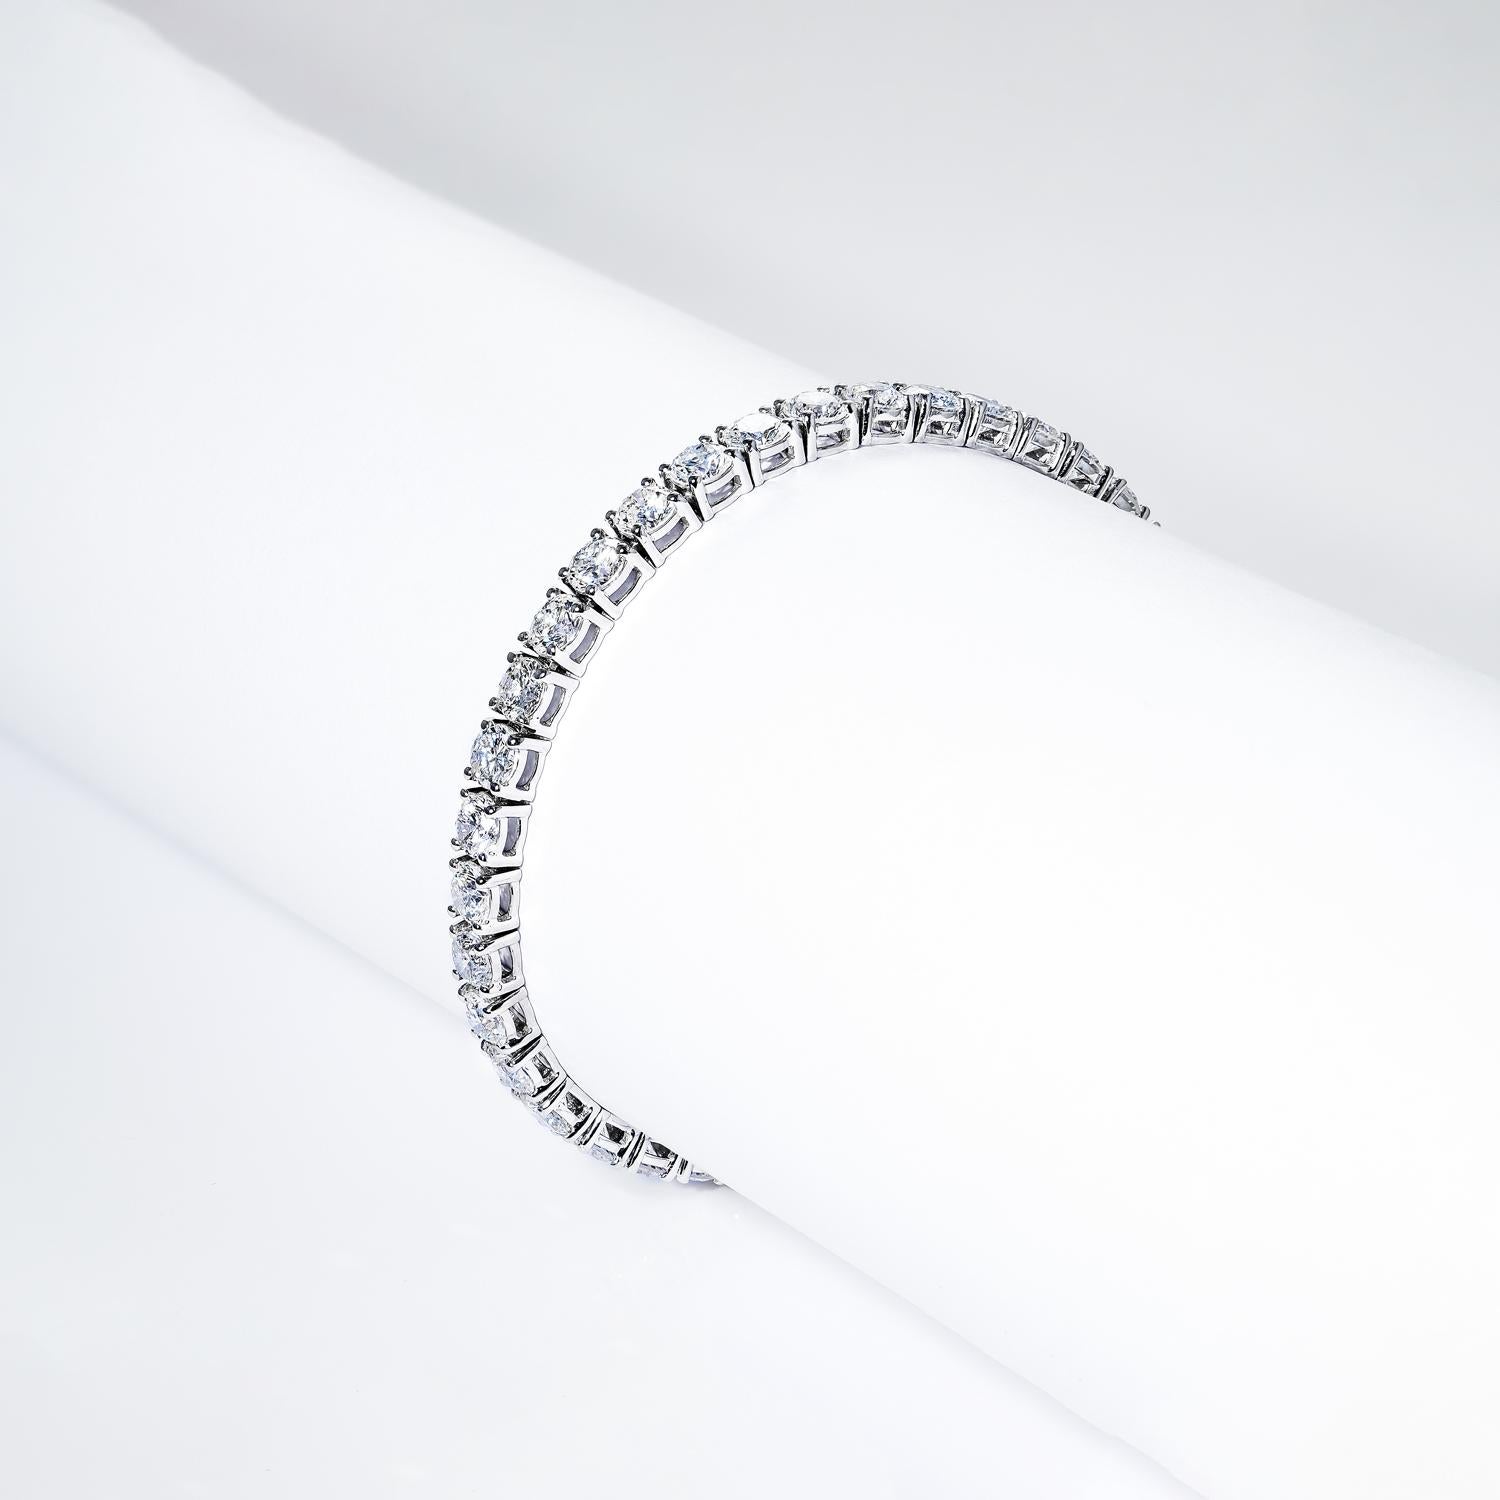 13 carat diamond tennis bracelet